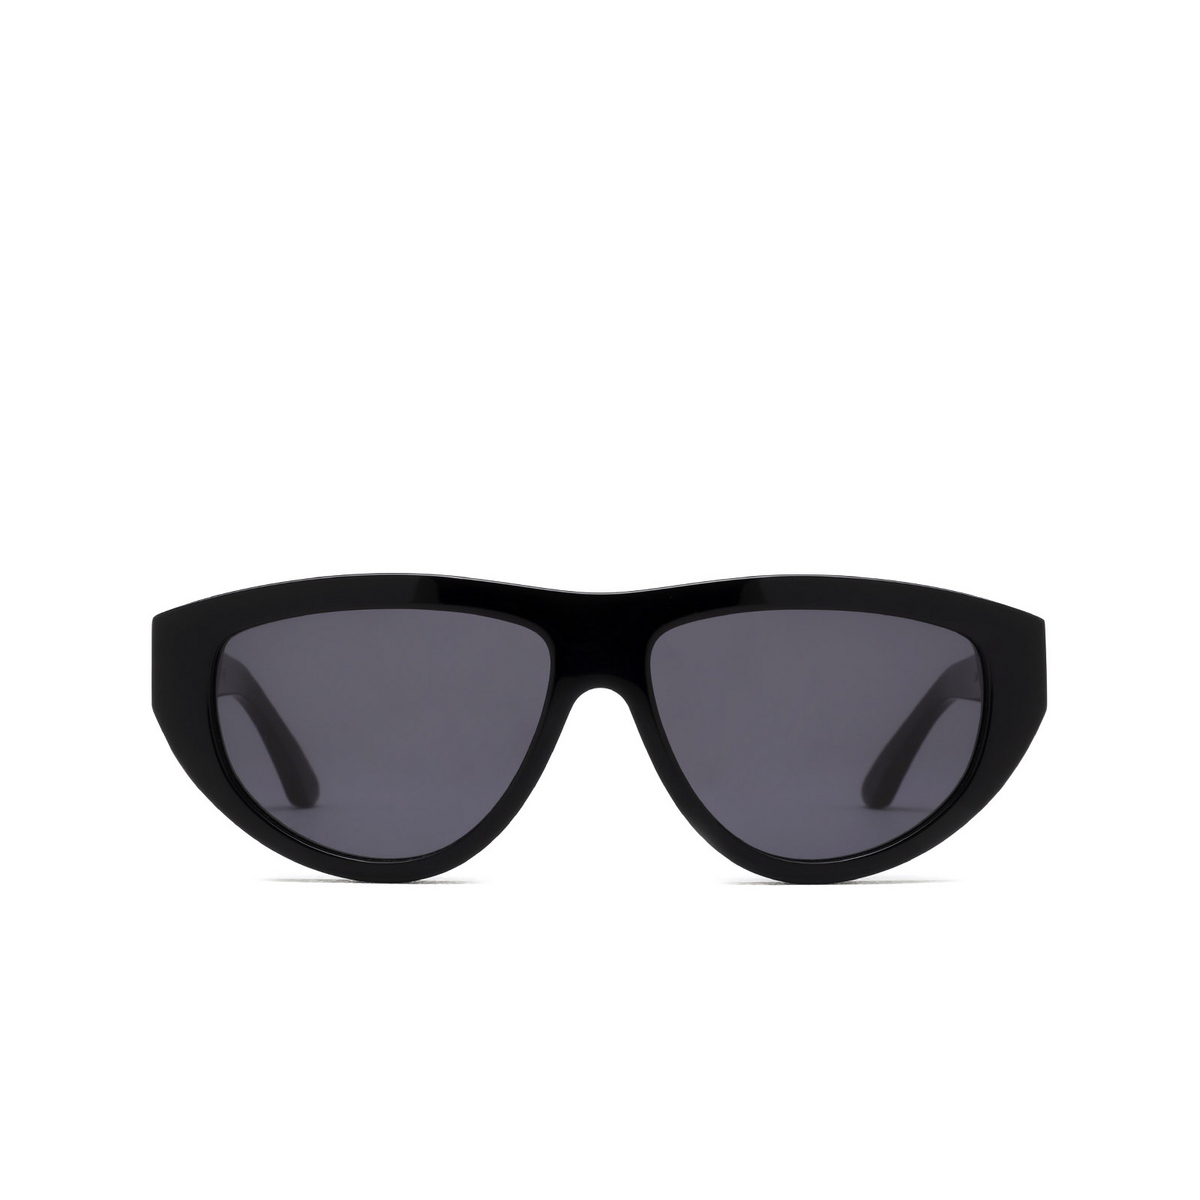 Huma® Oval Sunglasses: Viko color Black 06 - front view.